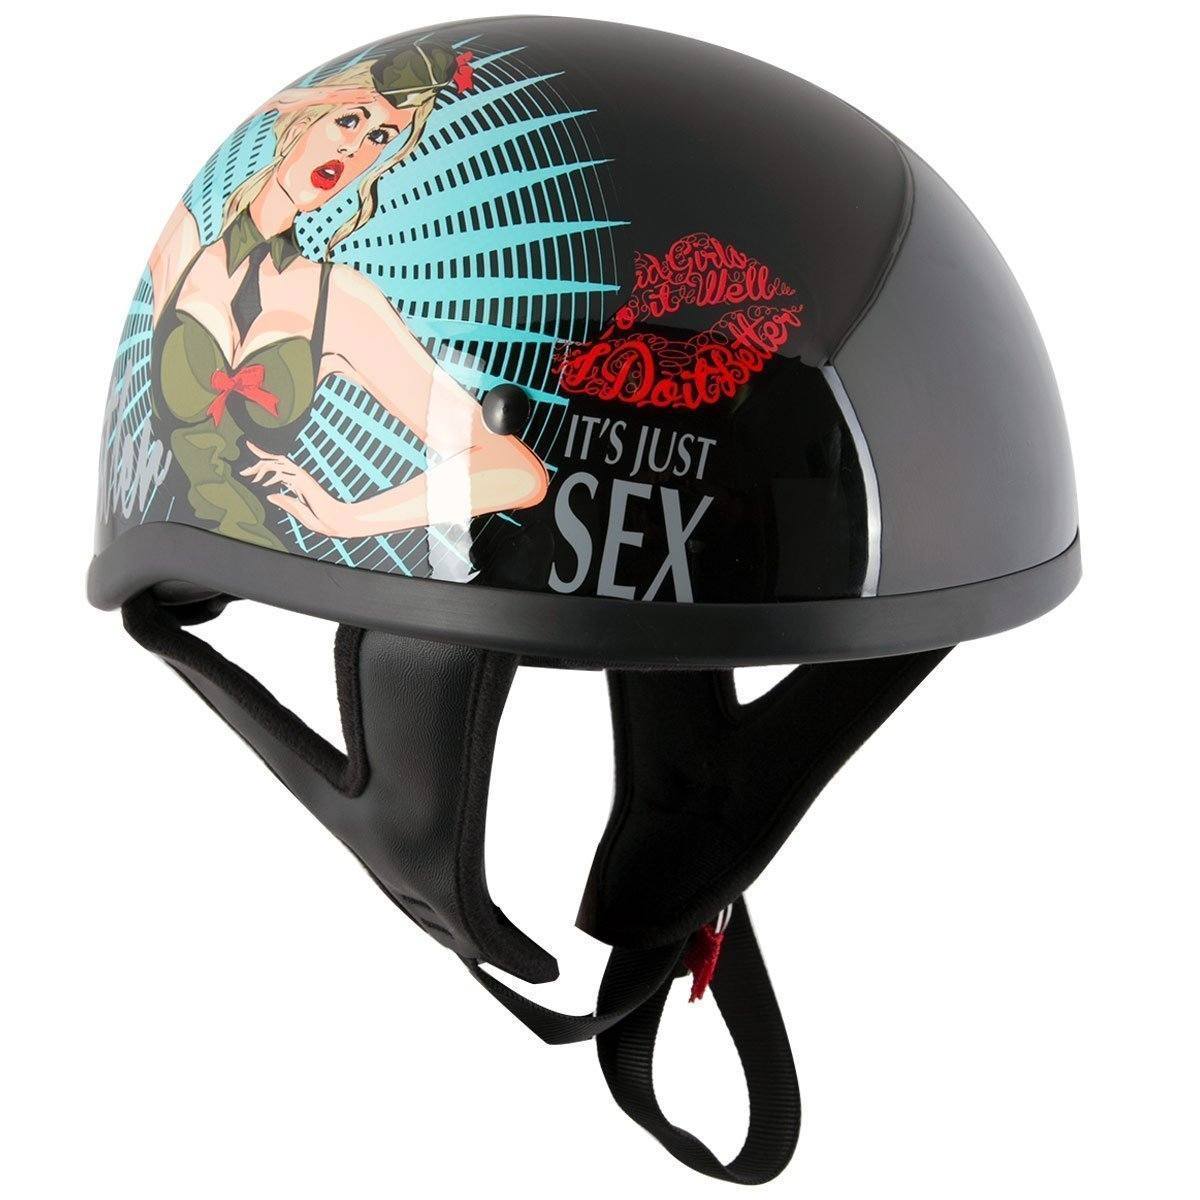 Outlaw Helmets Ht1 Hustler Glossy Black Its Just Sex Motorcycle Half Helmet For Men And Women Dot 0260